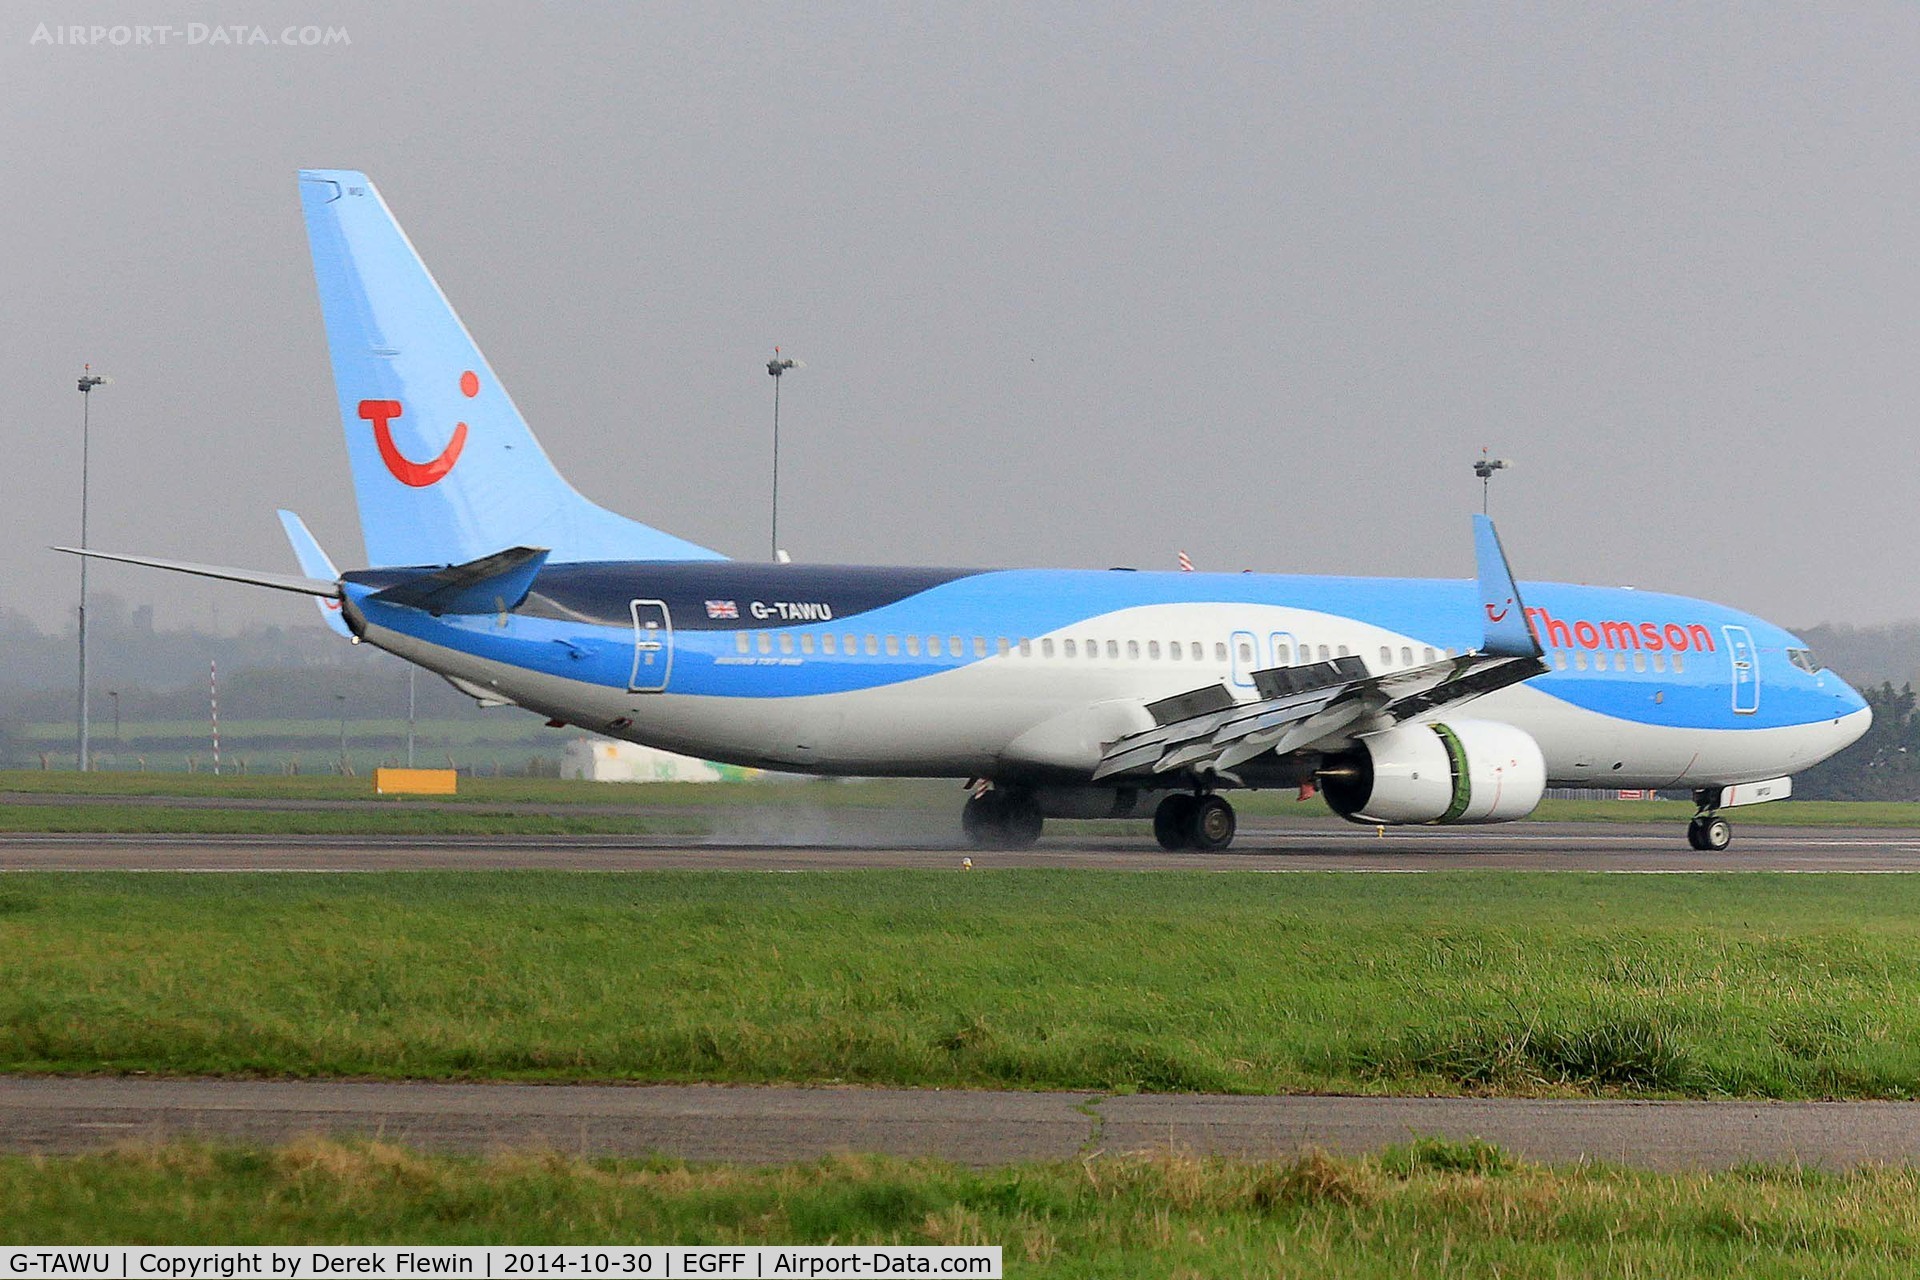 G-TAWU, 2014 Boeing 737-8K5 C/N 37263, 737-8K5, Thomson Airlines, previously N1786B, N1787B, Callsign Thomson 4HE, seen landing on runway 12 at EGFF, out of Malaga.